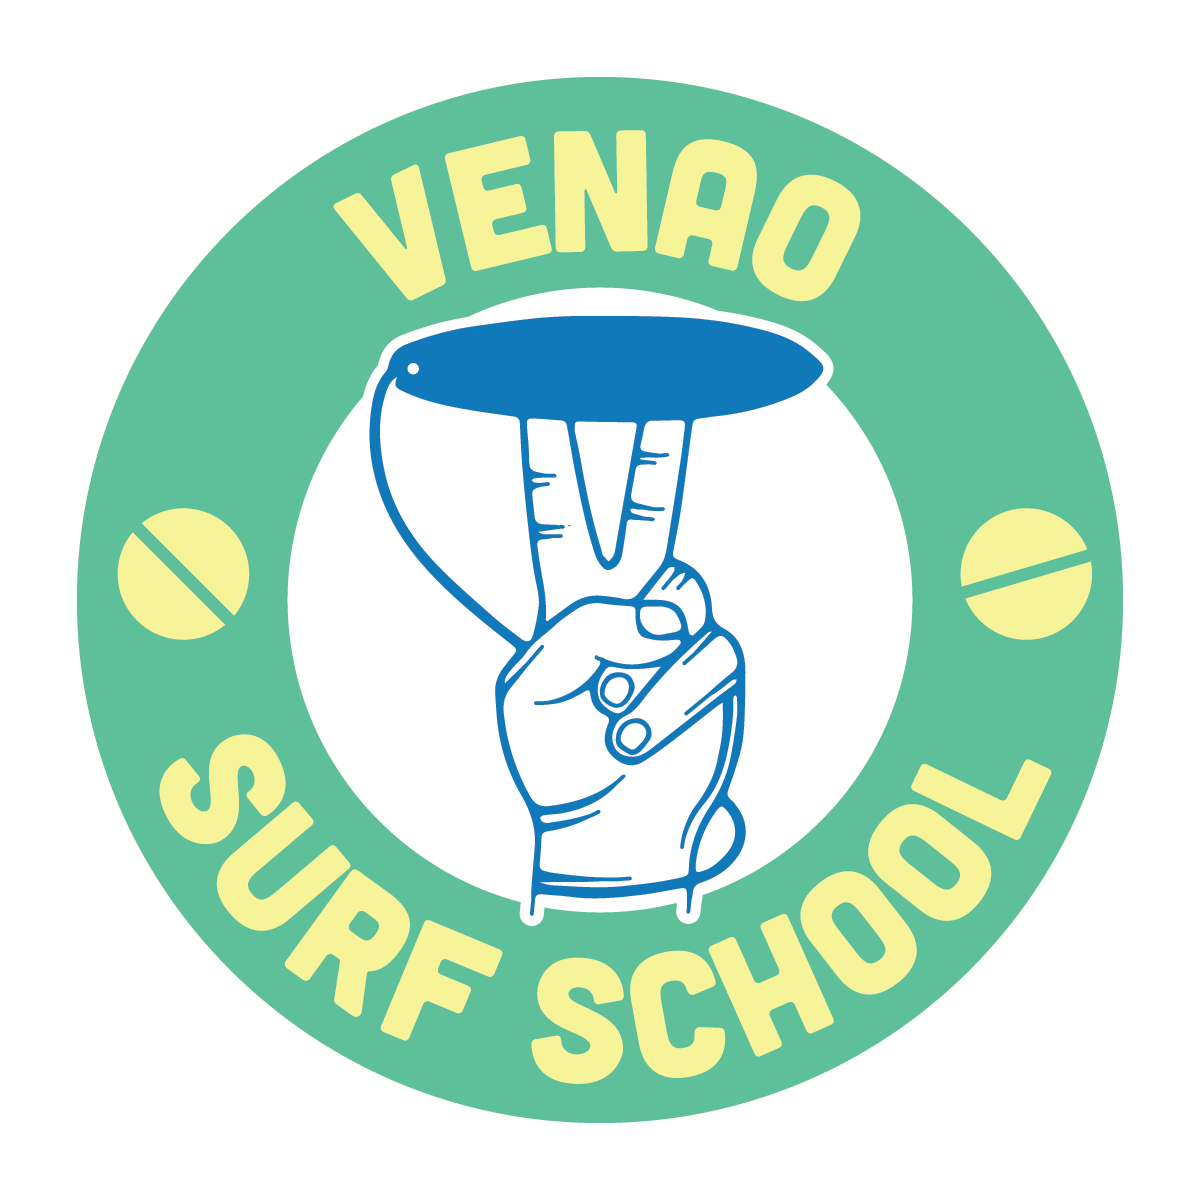 Venao Surf School